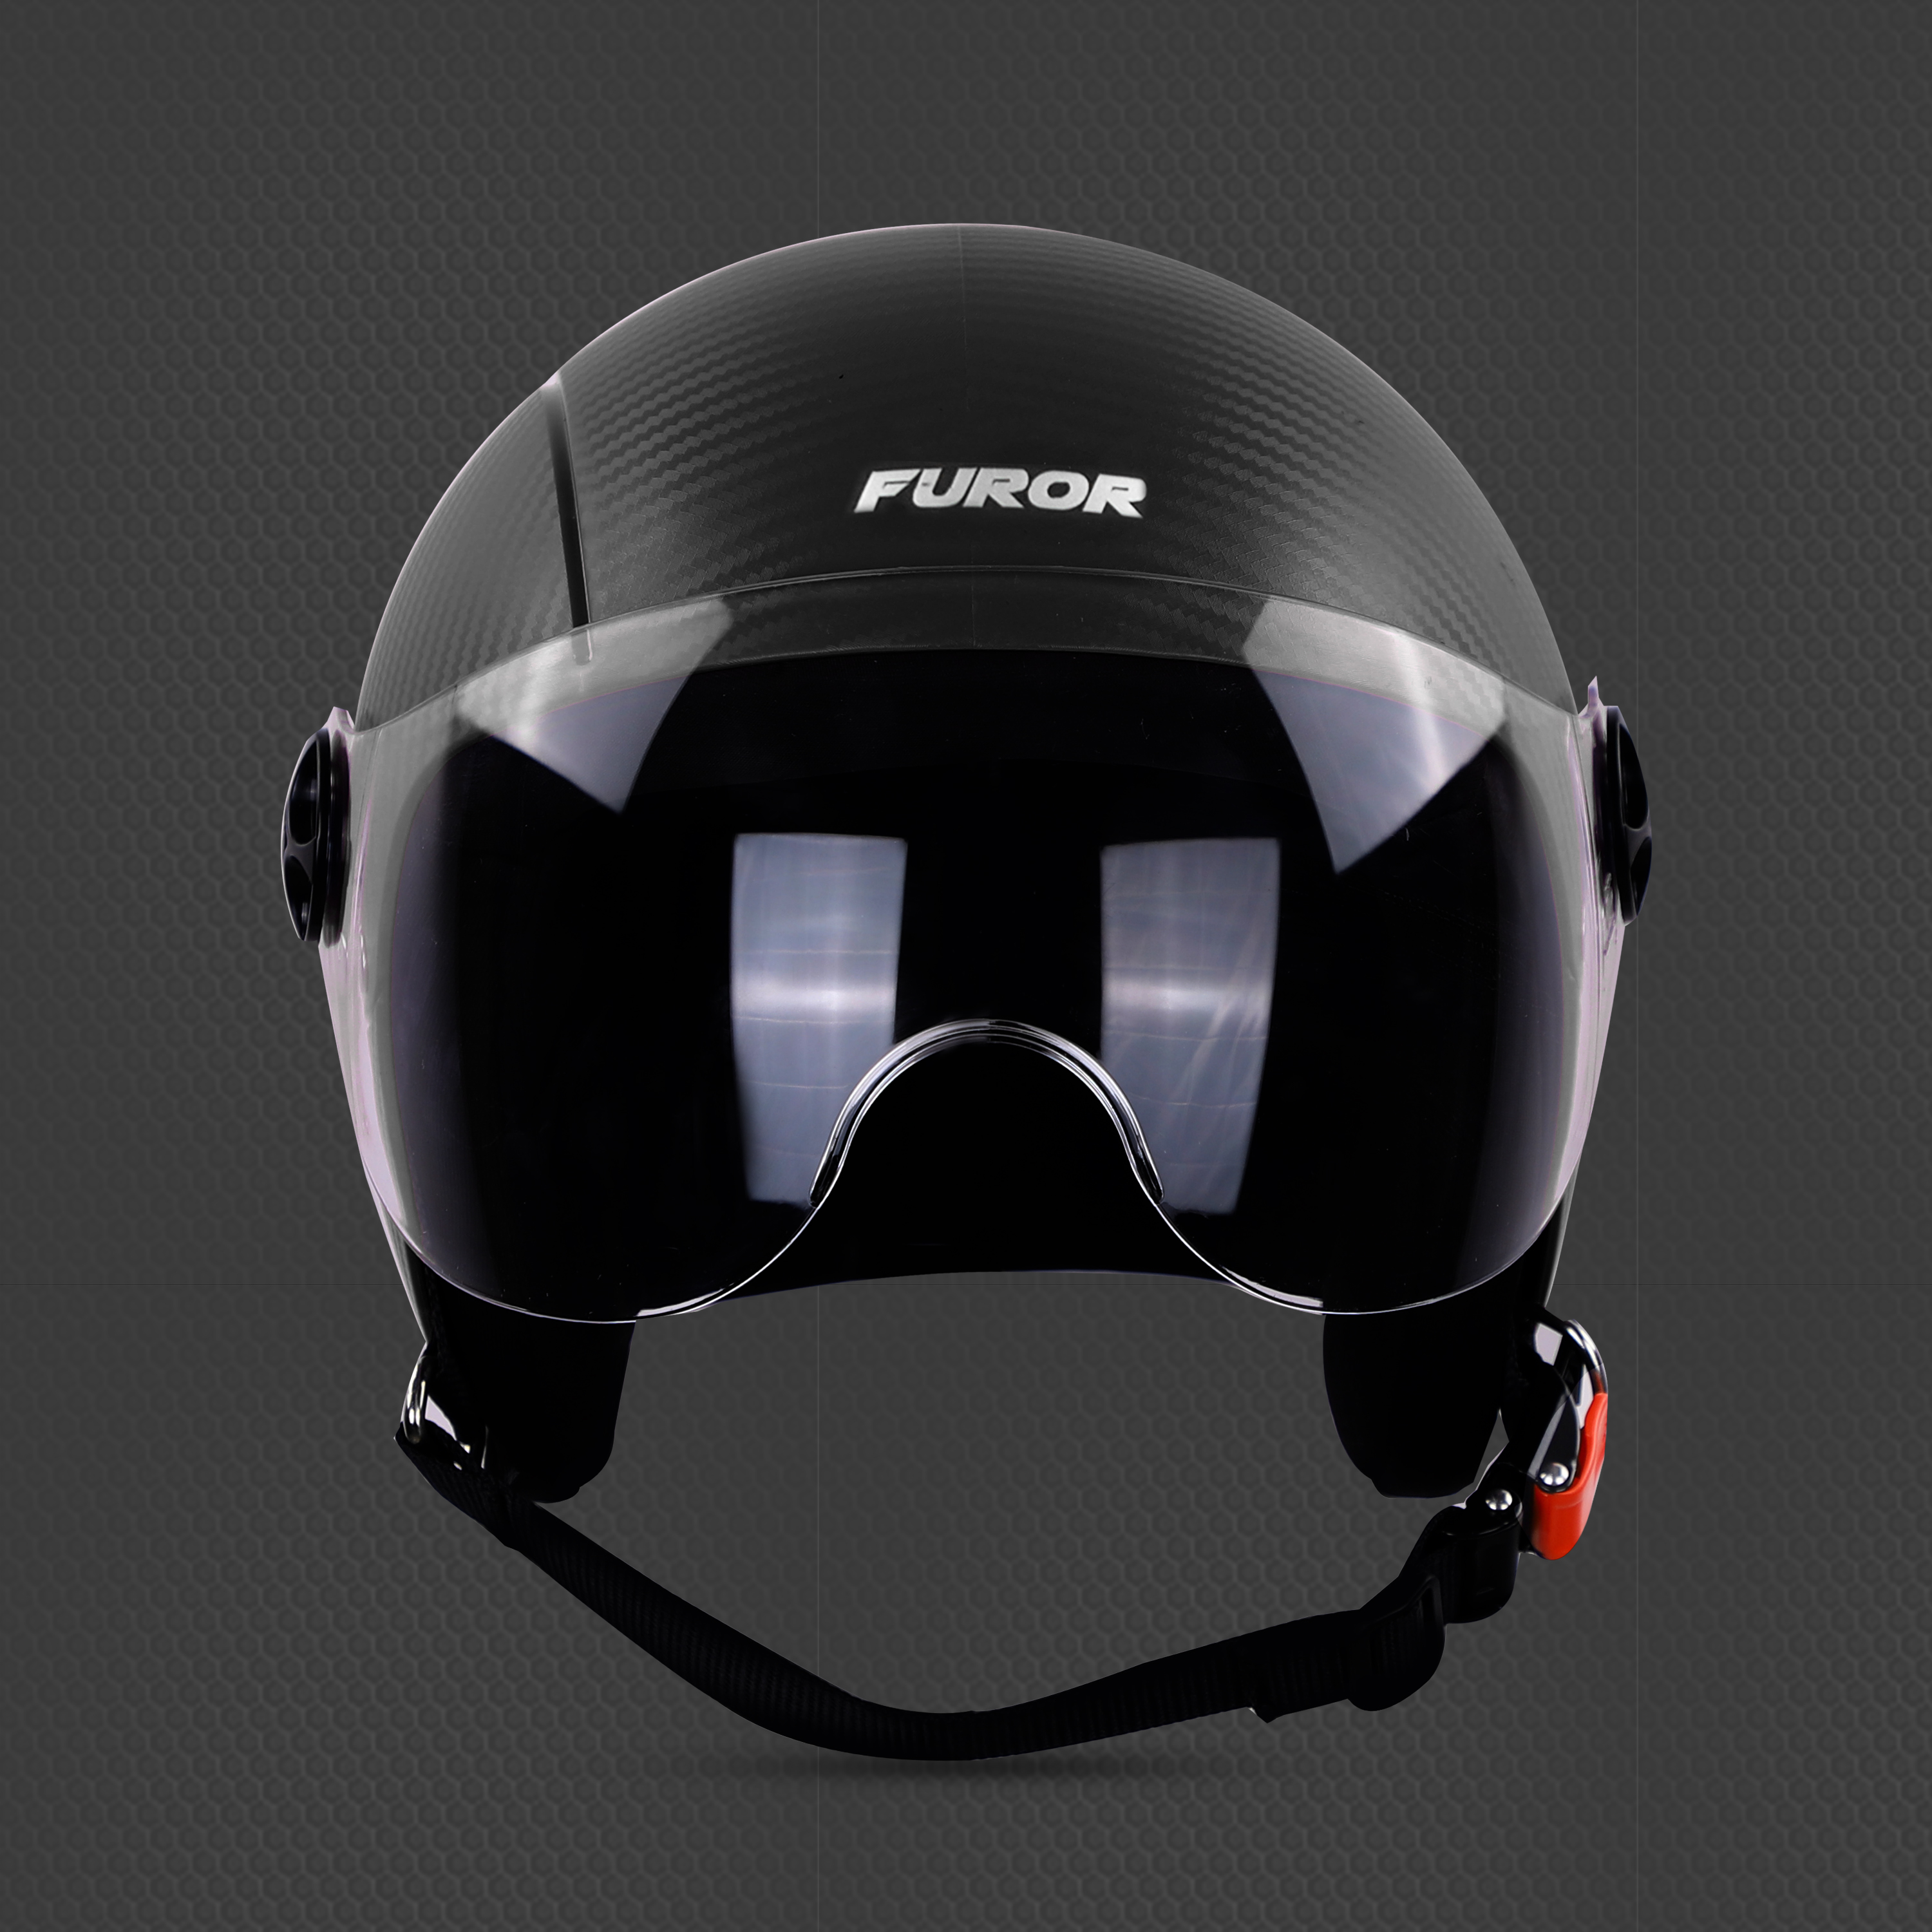 Steelbird SBH-16 Furor ISI Certified Open Face Helmet (Dashing Black With Clear Visor)